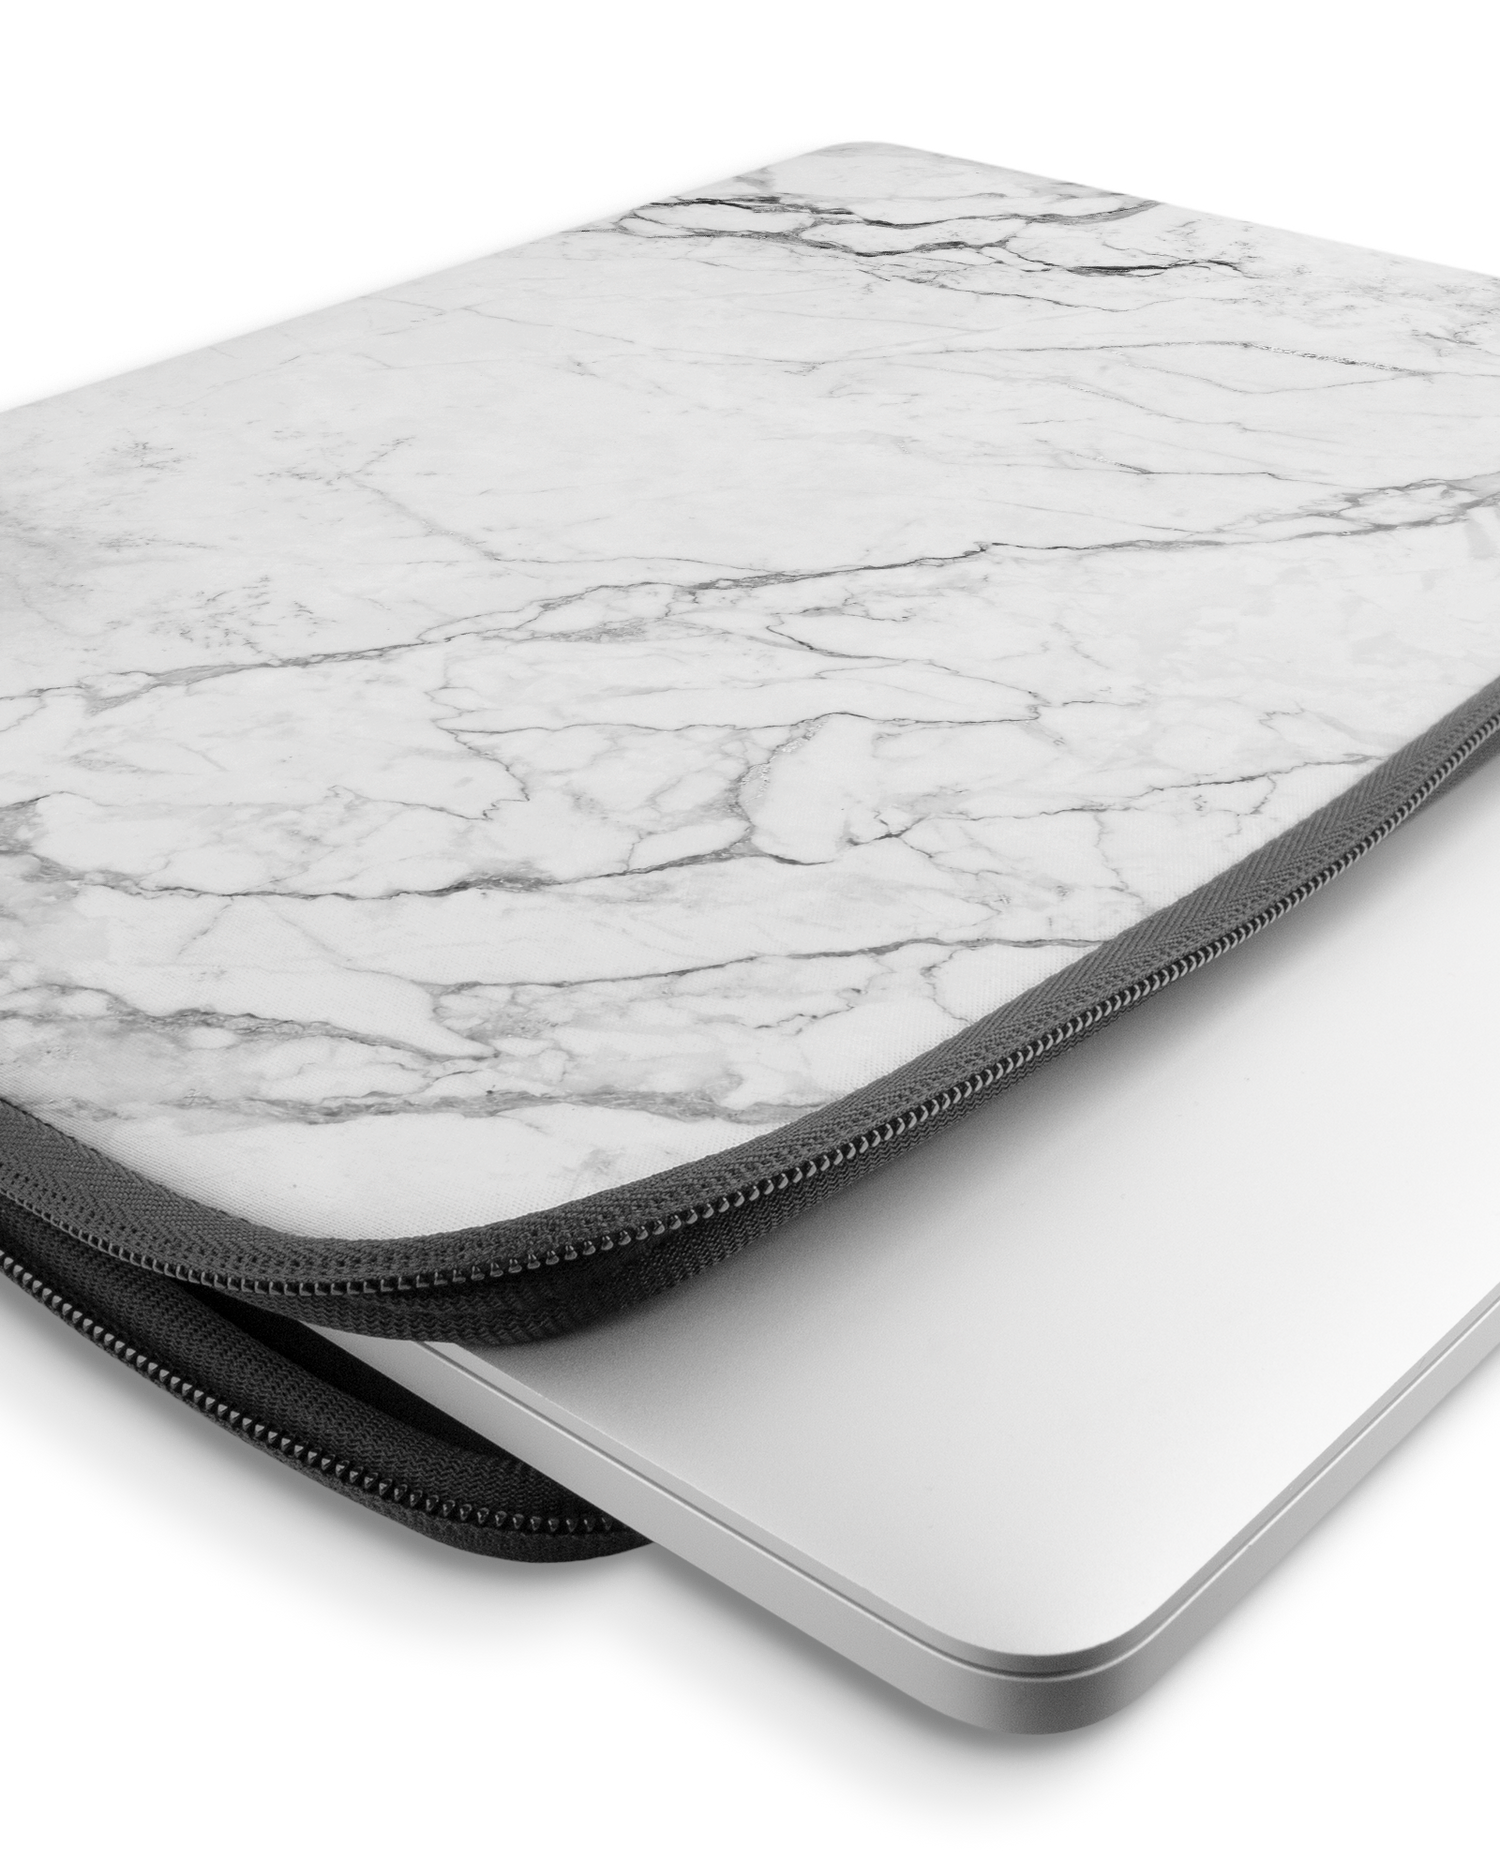 White Marble Laptophülle 15-16 Zoll mit Gerät im Inneren